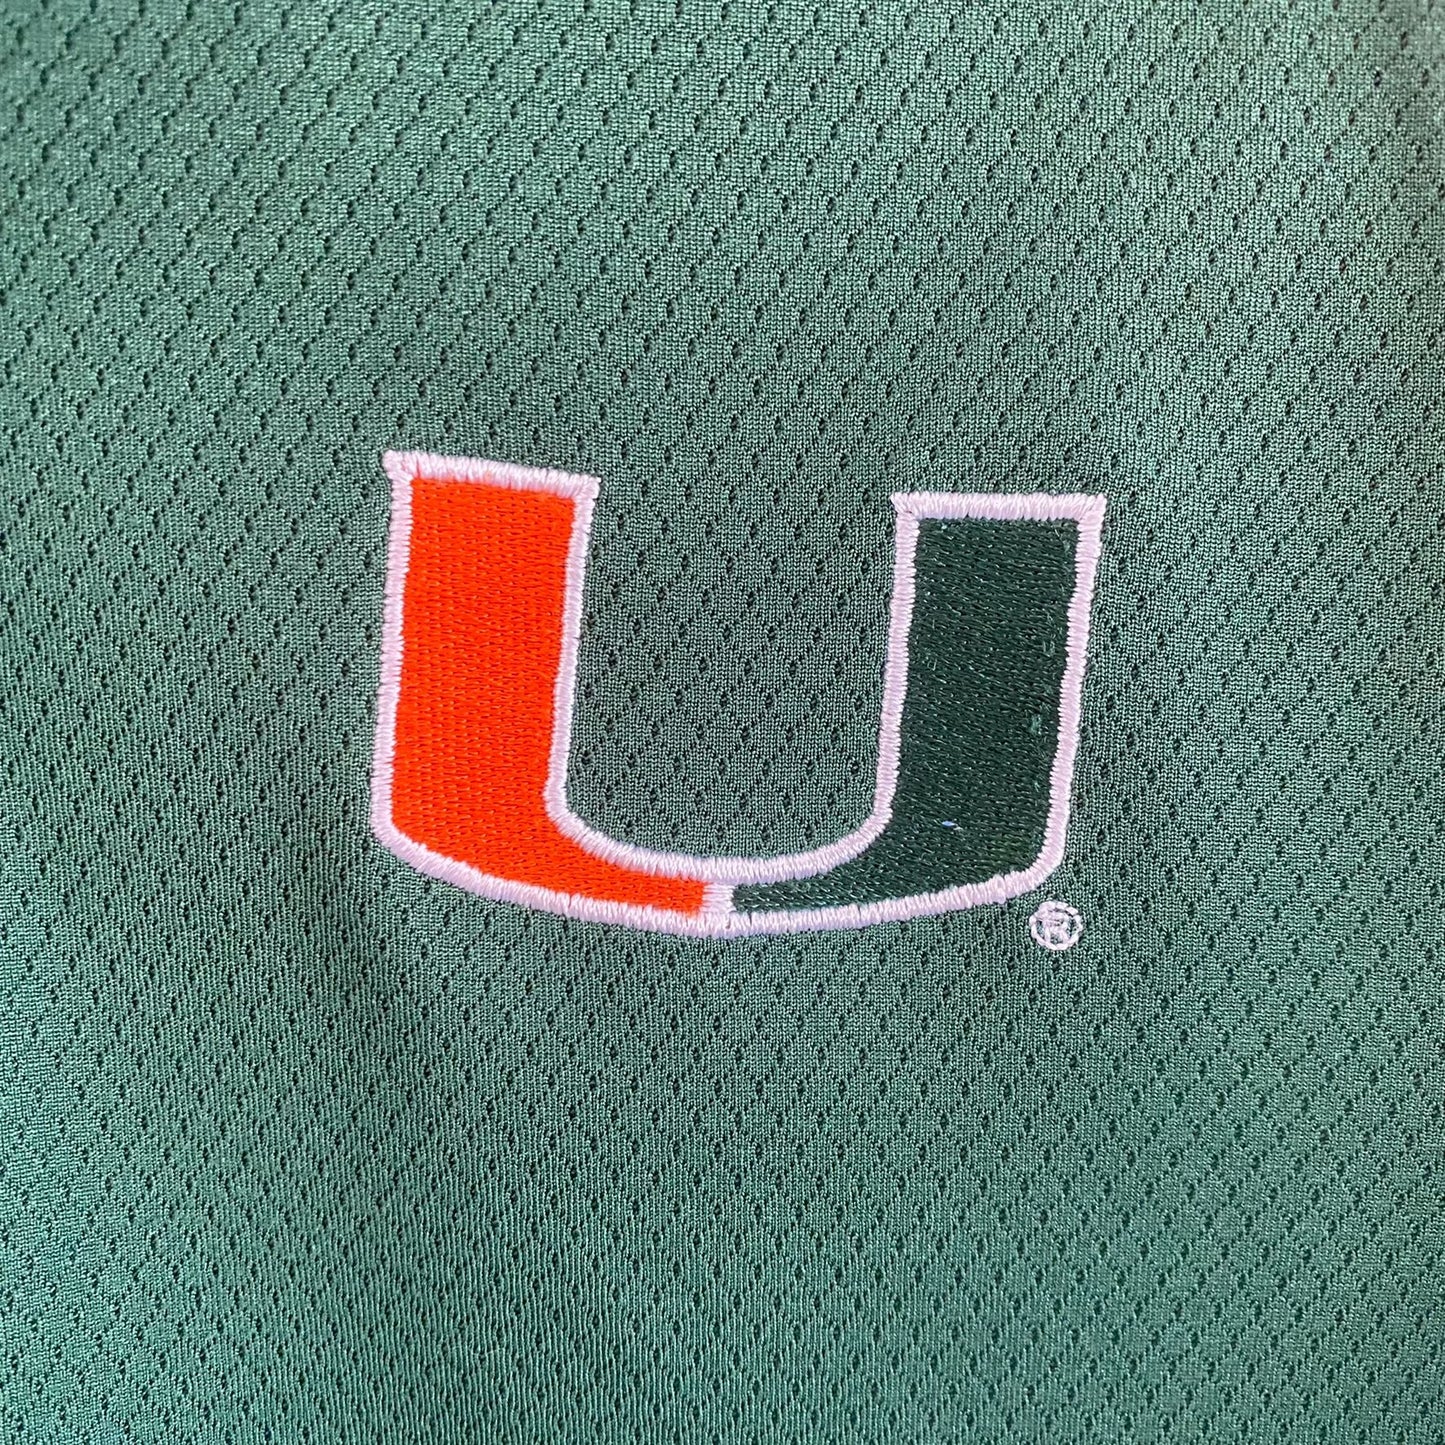 Miami Hurricanes Green Polo Shirt